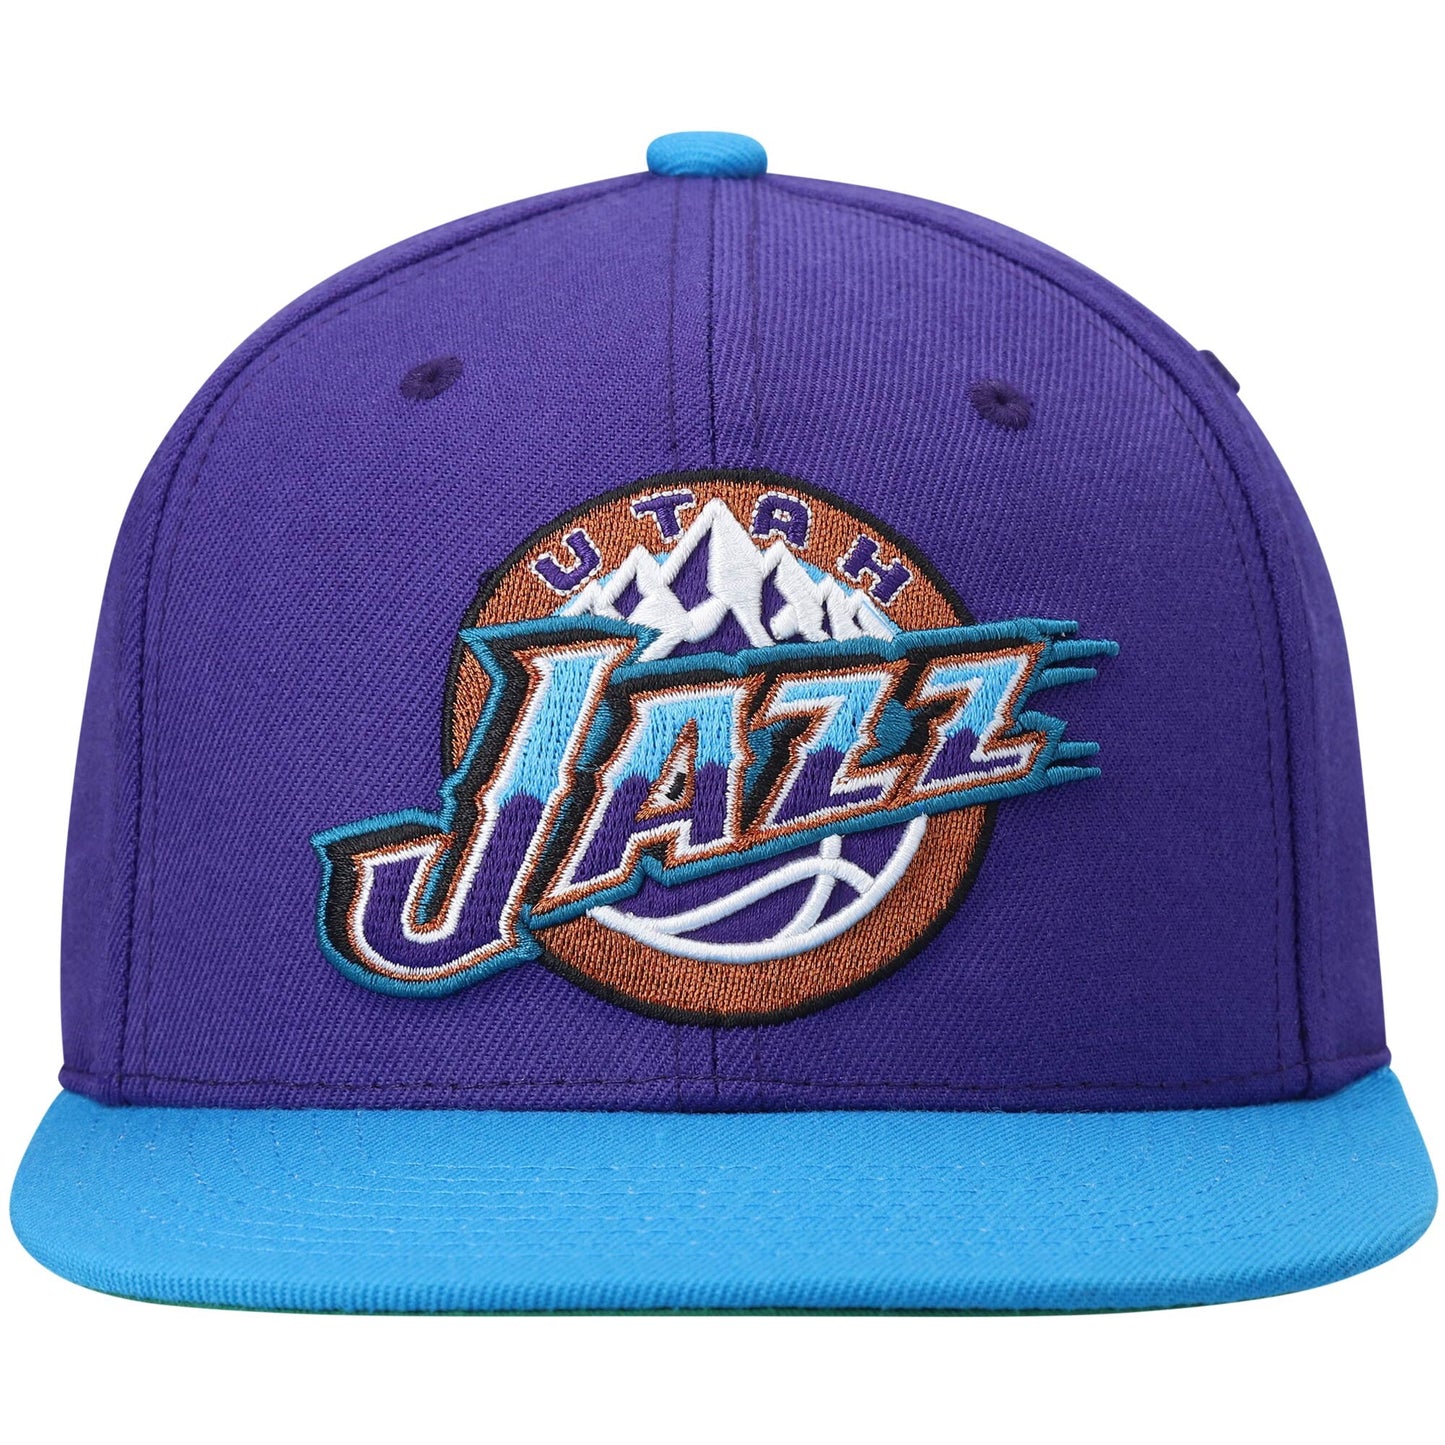 Mens NBA Utah Jazz HWC 2-Tone Purple/Teal 2.0 Snapback Hat By Mitchell And Ness